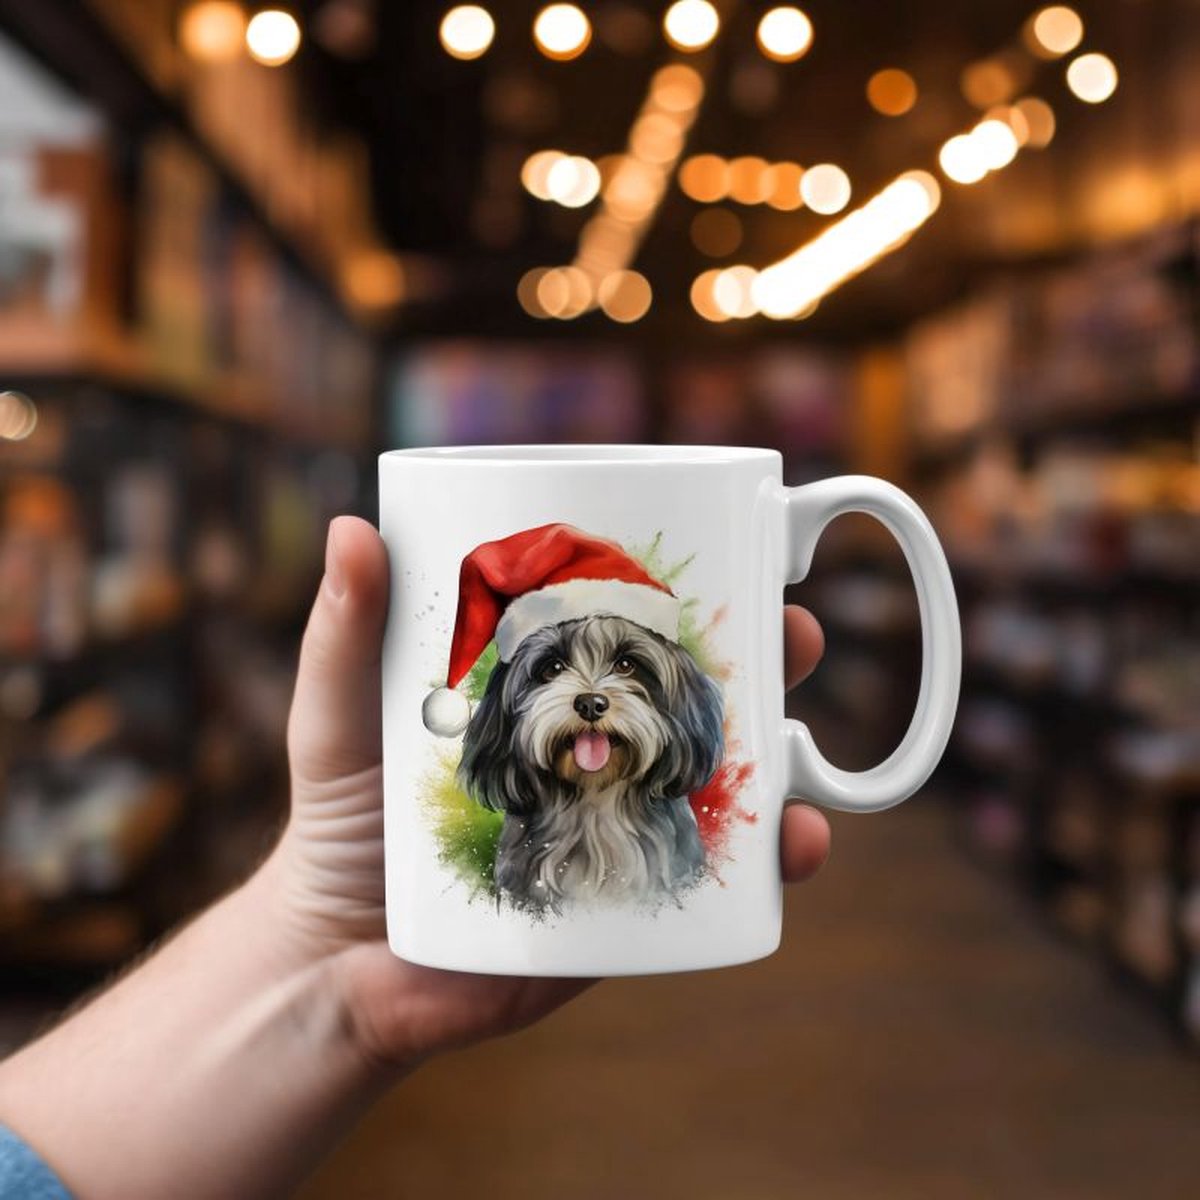 Mok Havnese hond Beker cadeau voor haar of hem, kerst, verjaardag, honden liefhebber, zus, broer, vriendin, vriend, collega, moeder, vader, hond